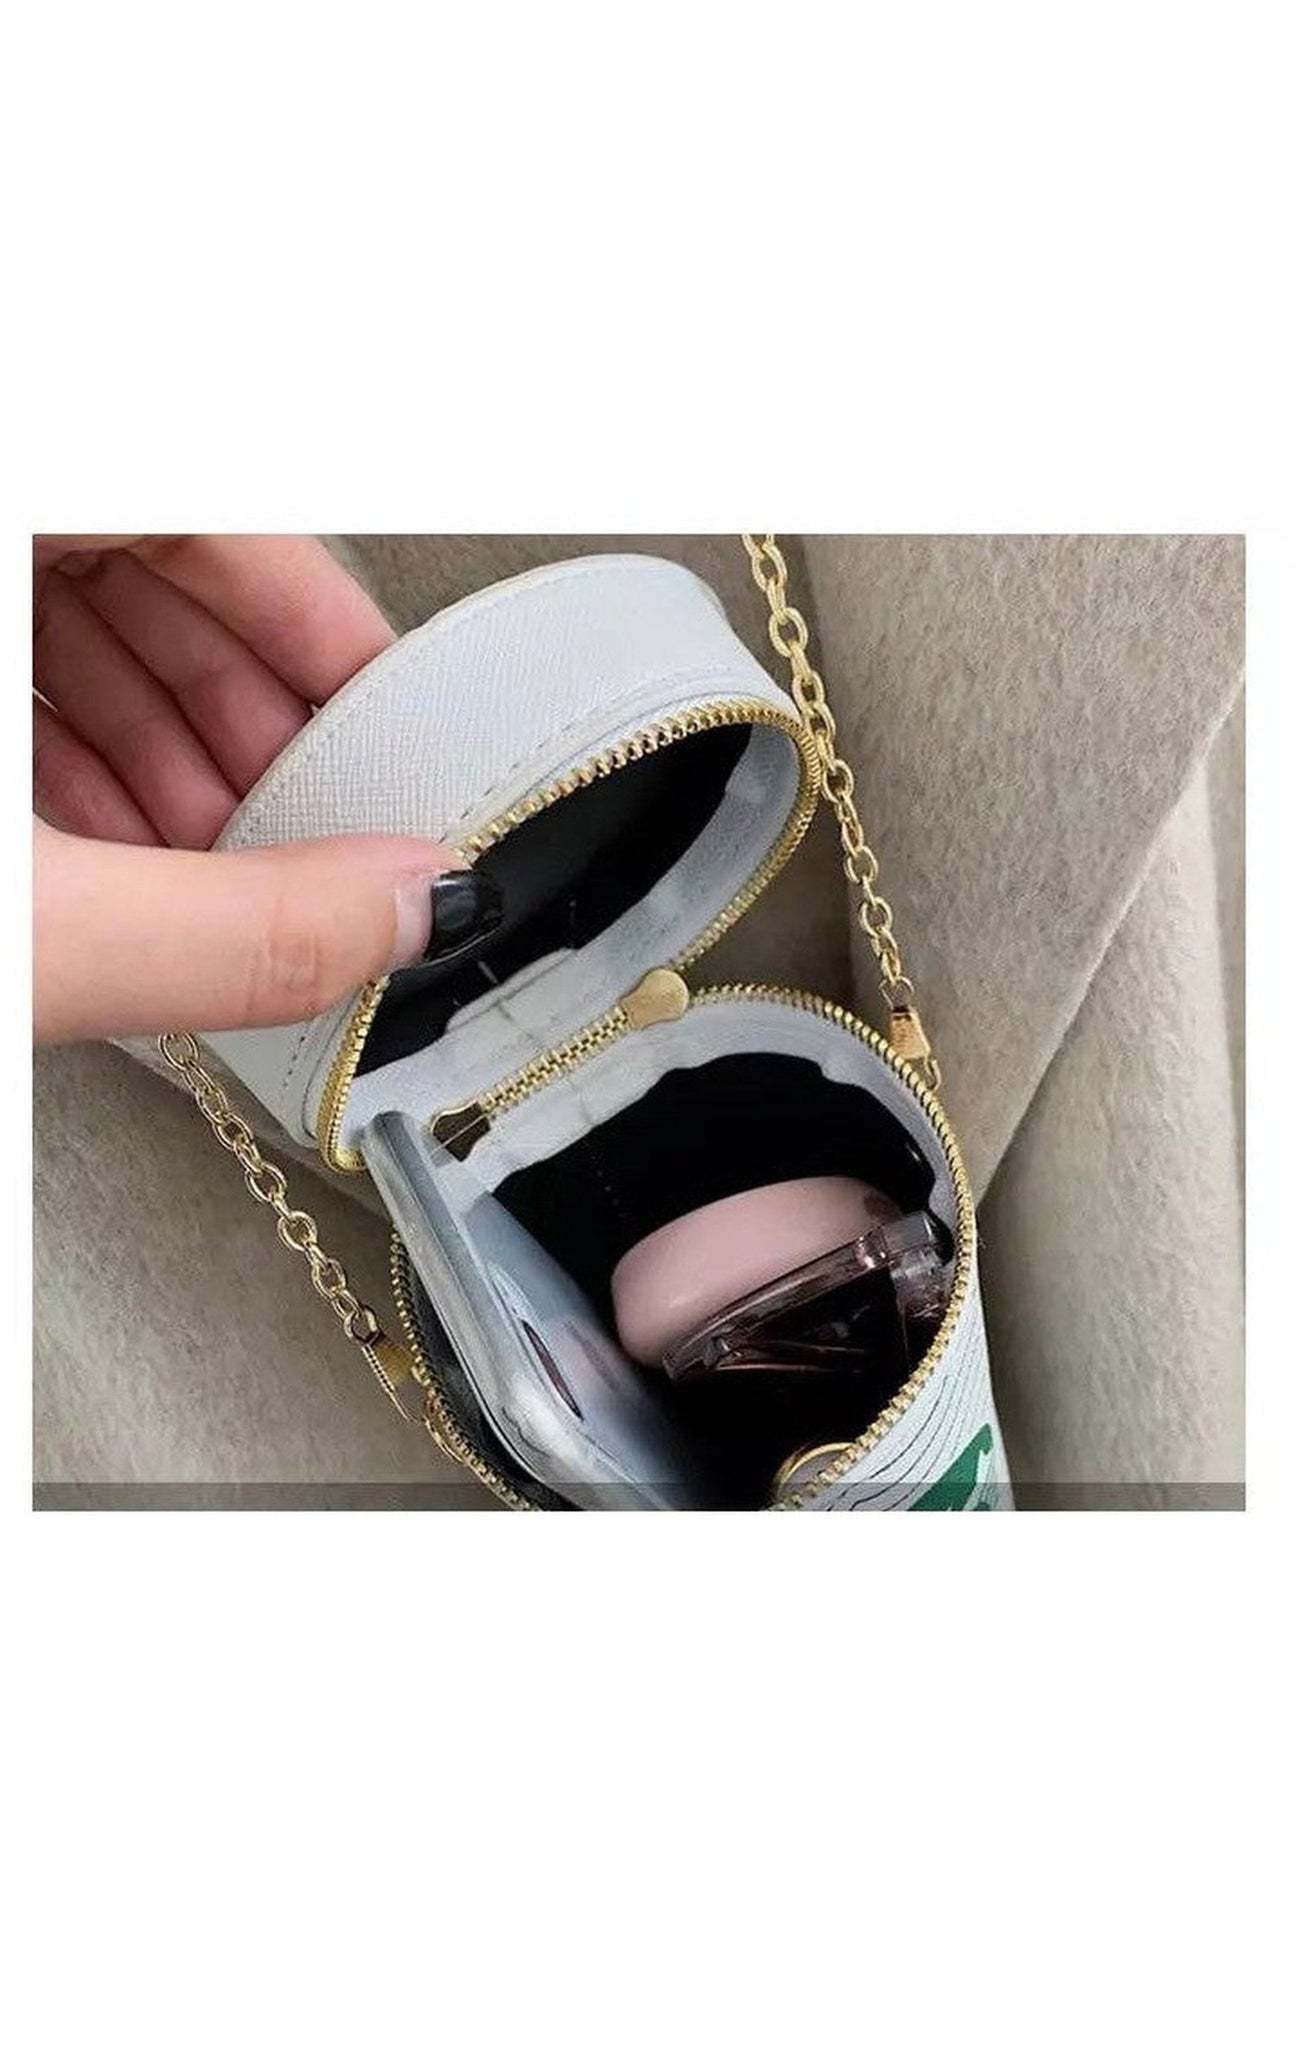 Starbucks inspired coffee bag purse